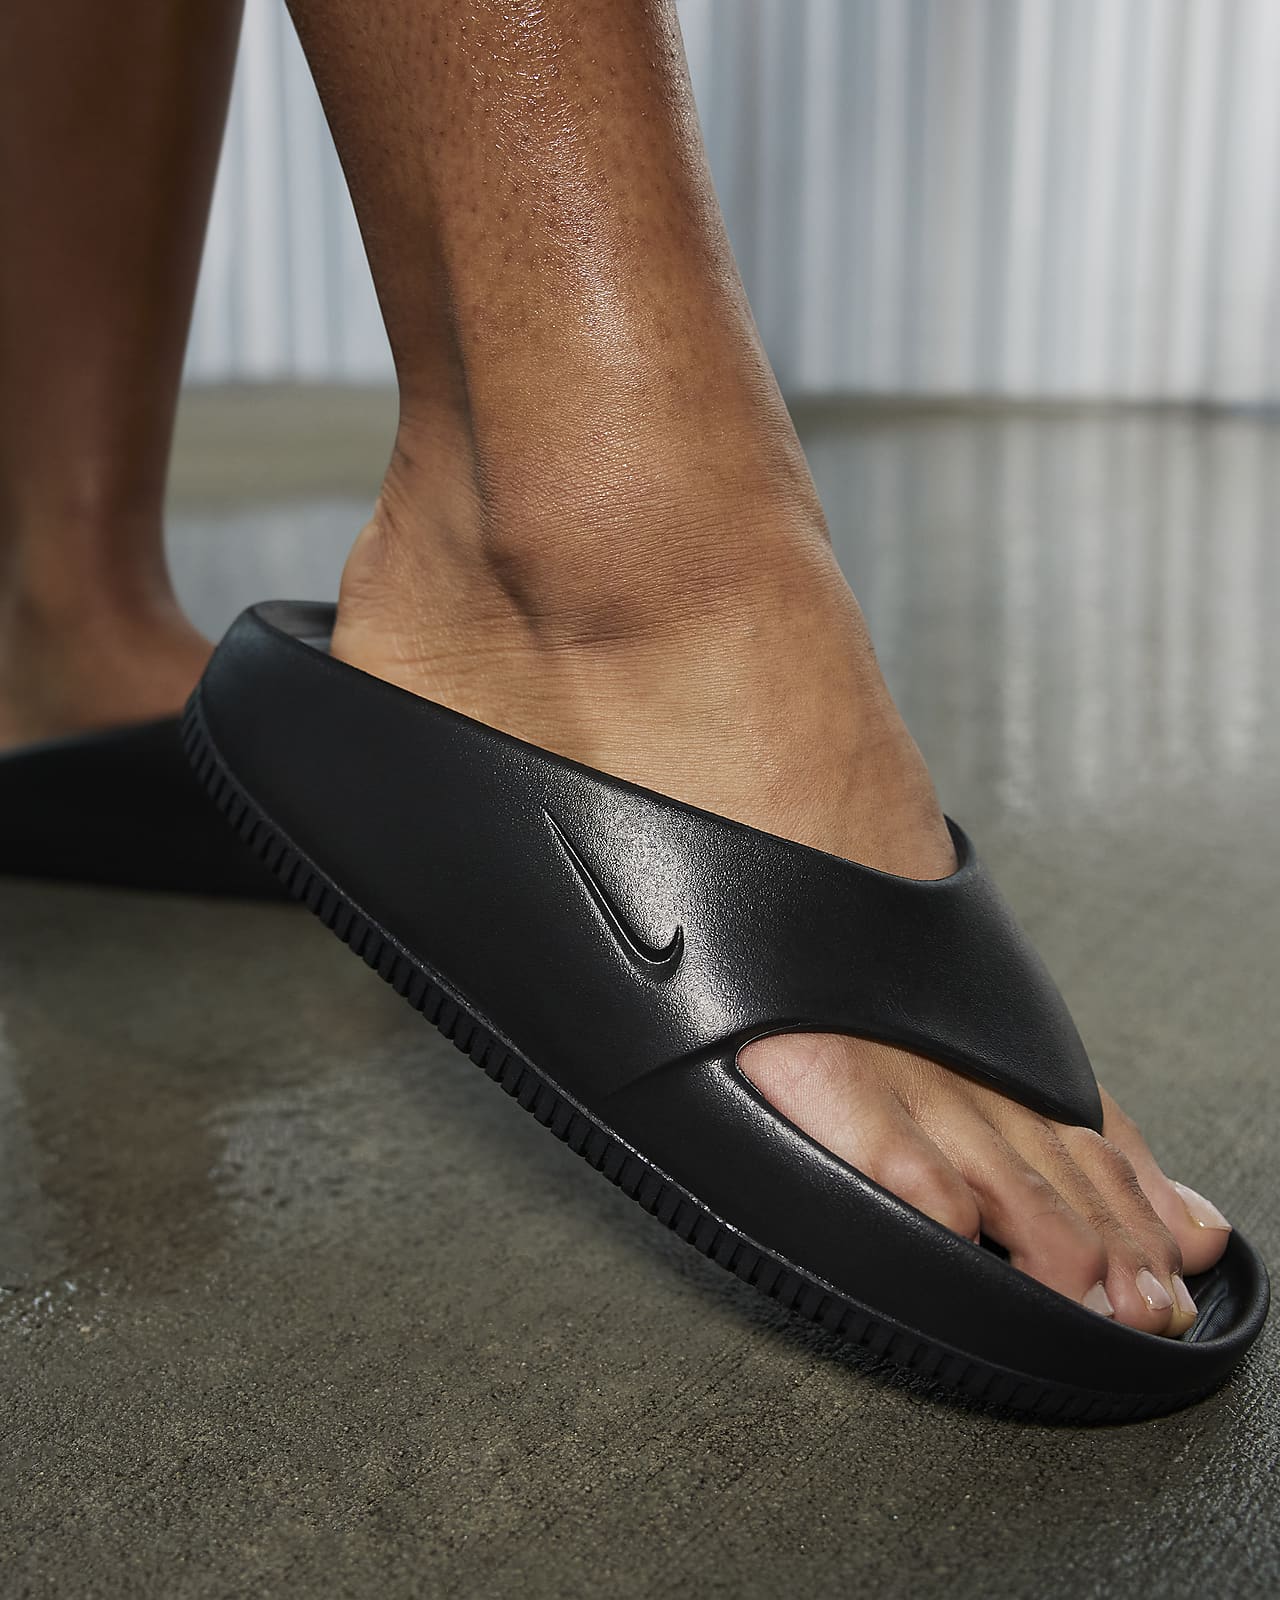 Nike Comfort Thong Review